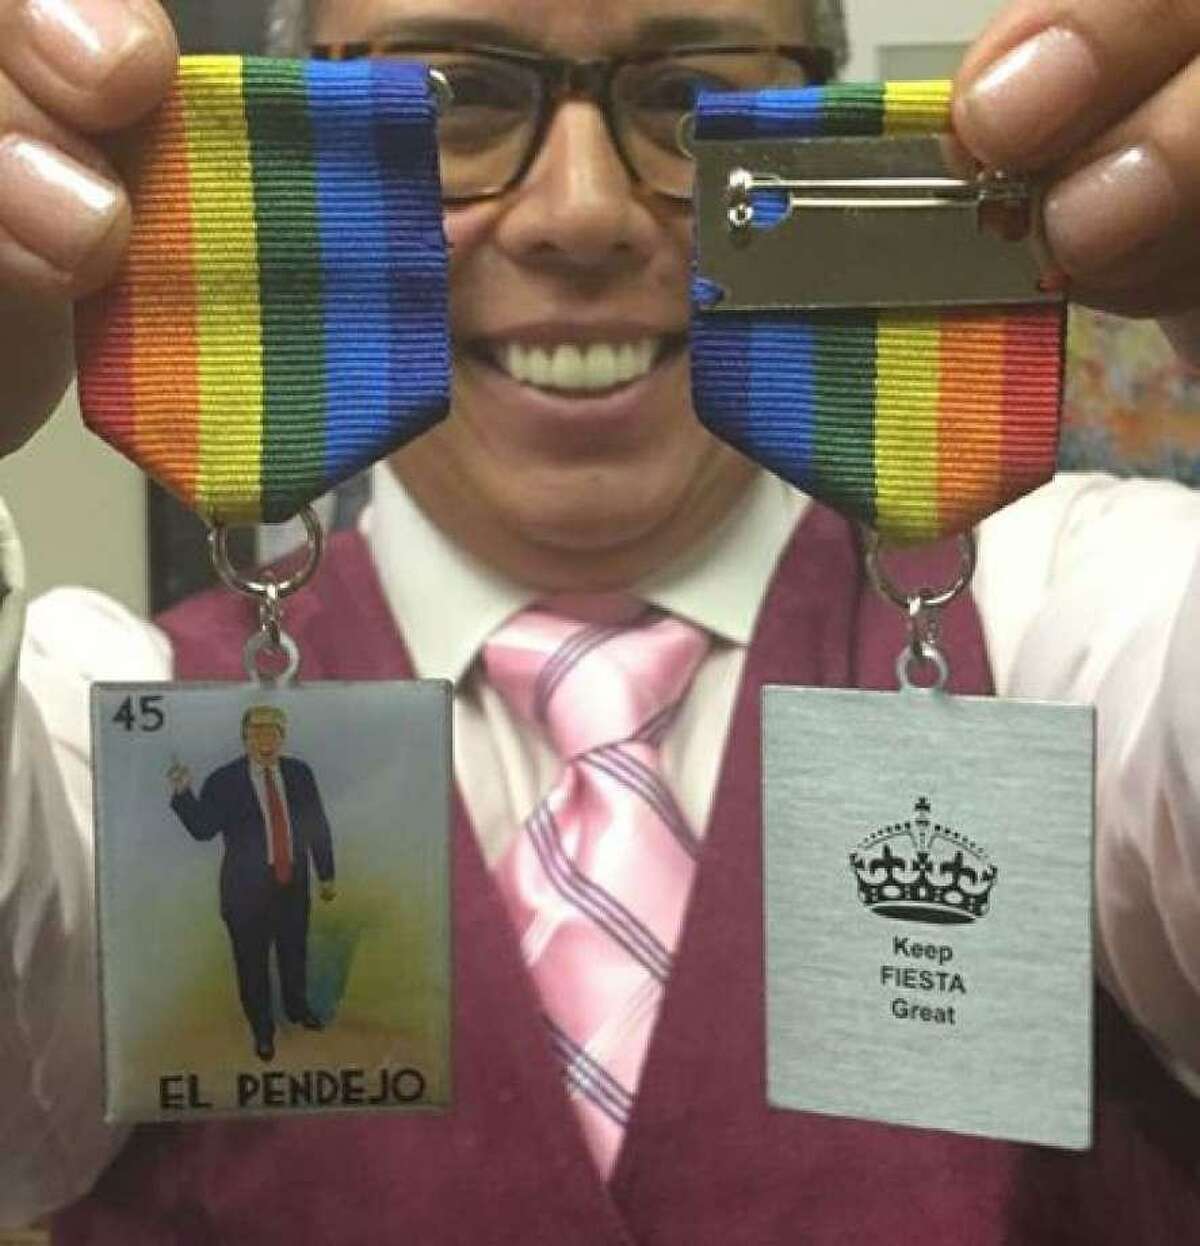 San Antonio attorney Rosie Gonzalez is seen with her "El Pendejo," President Donald Trump-inspired medal.